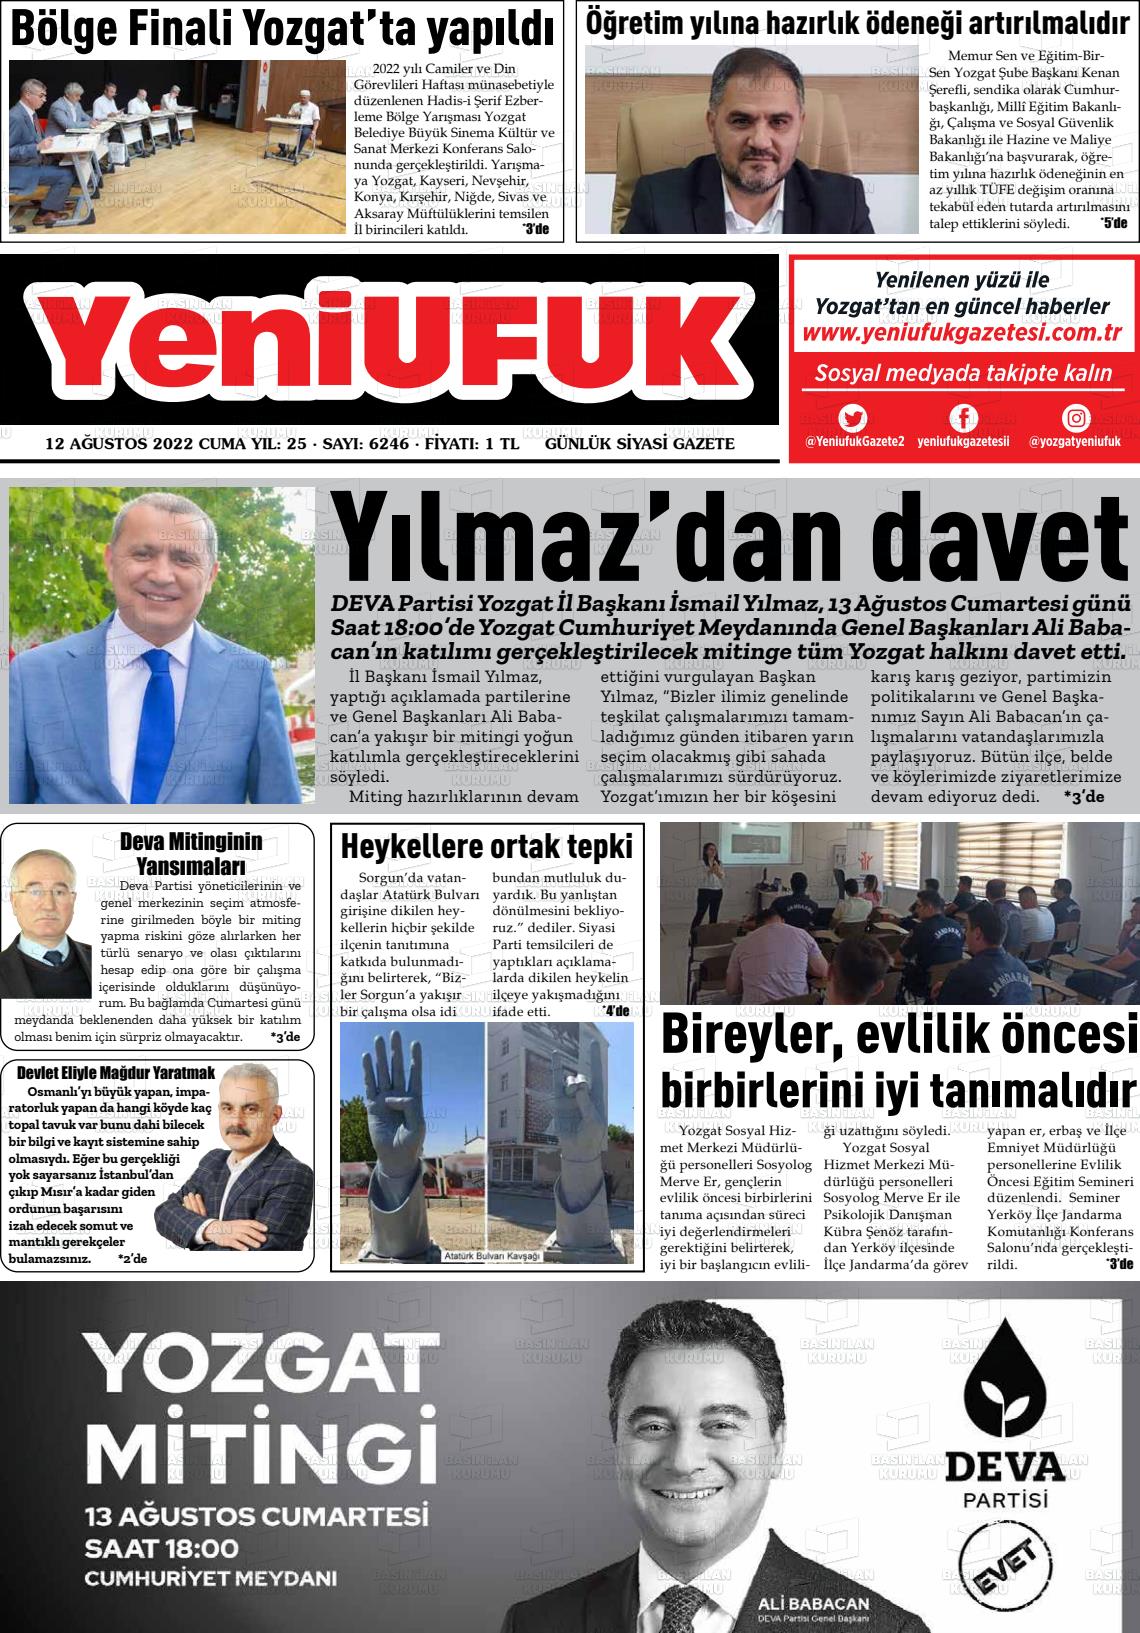 12 Ağustos 2022 Yozgat Yeni Ufuk Gazete Manşeti